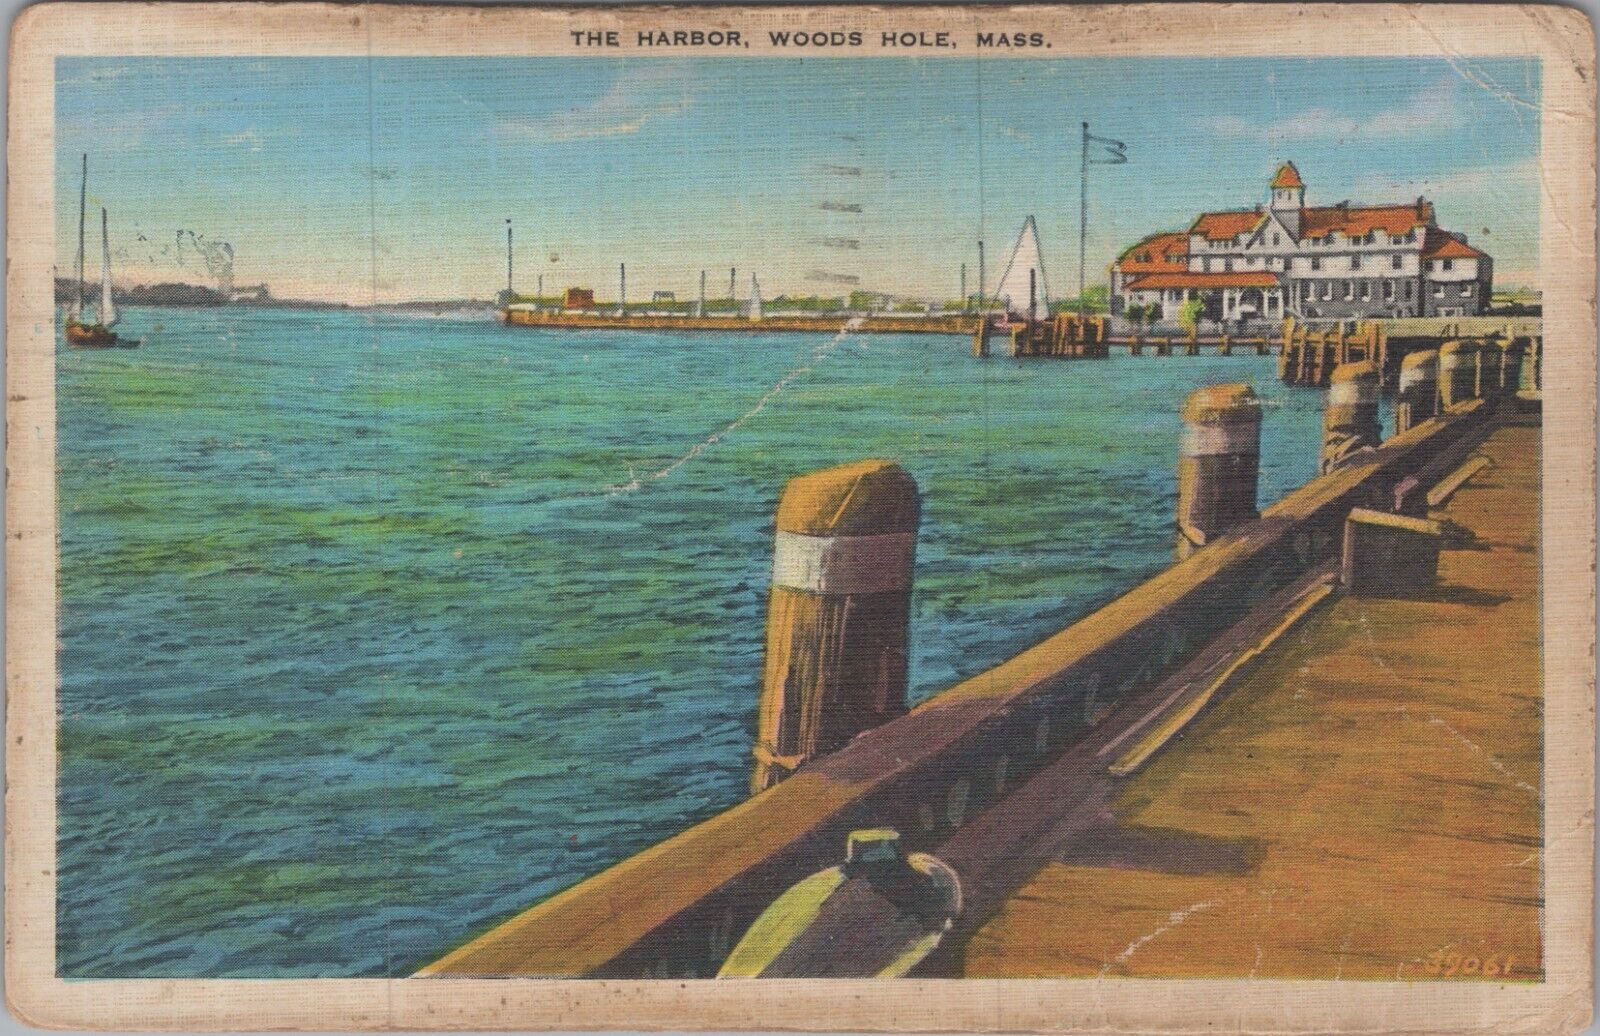 The Harbor, Woods Hole, Massachusetts MA 1938 Postcard 7467.1 MR ALE